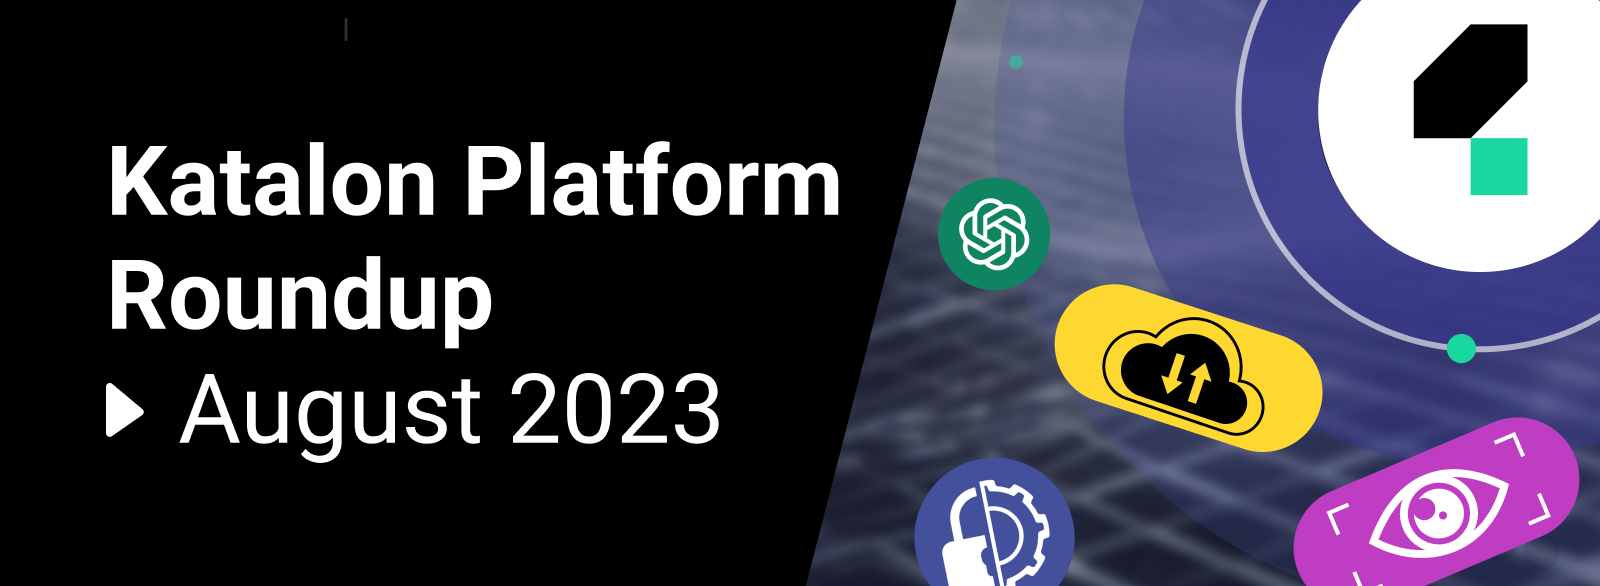 Katalon Platform Roundup August 2023